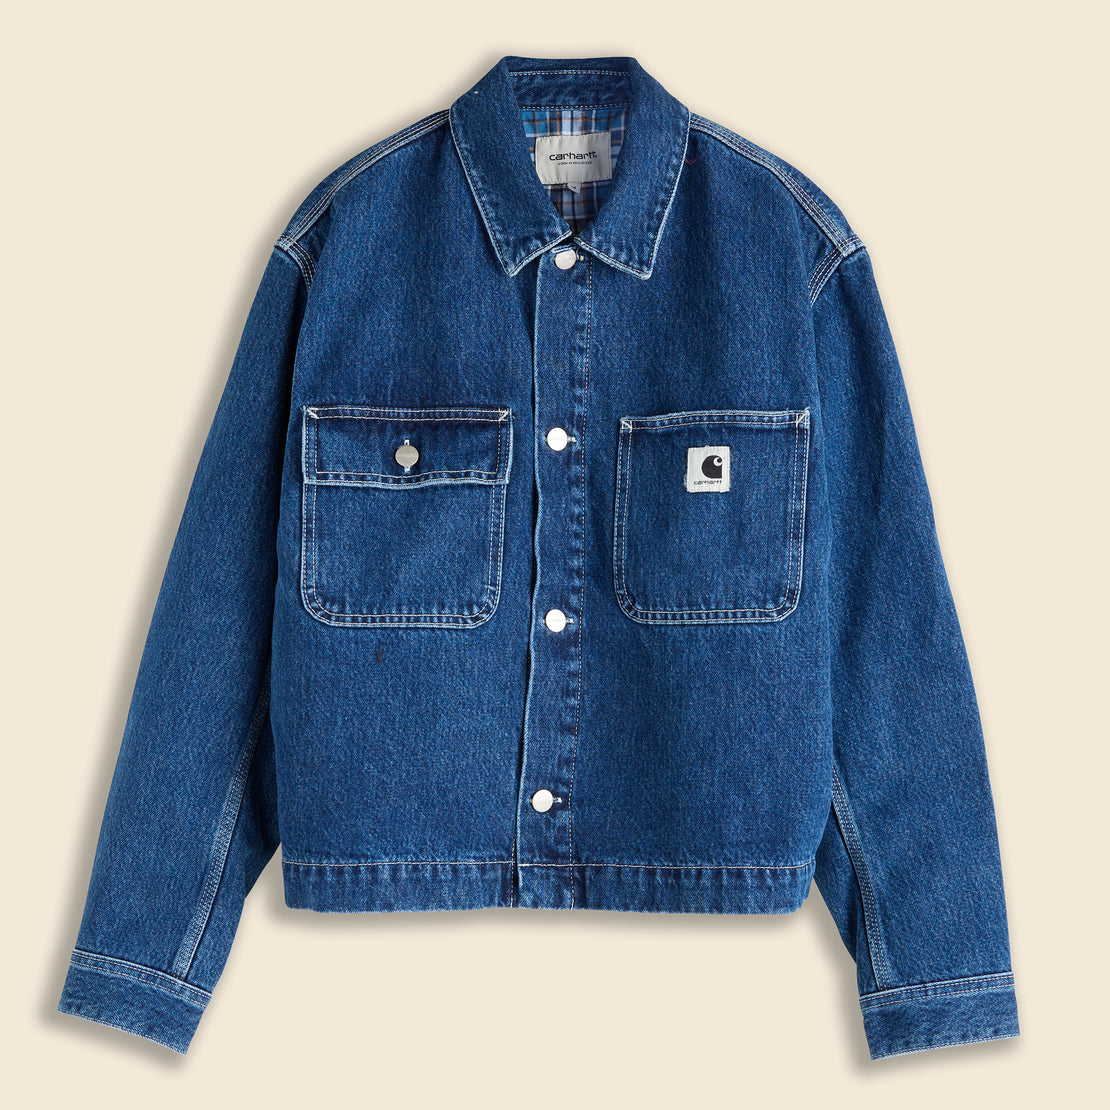 Carhartt WIP Rider Shirt Jacket - Blue Stone Washed